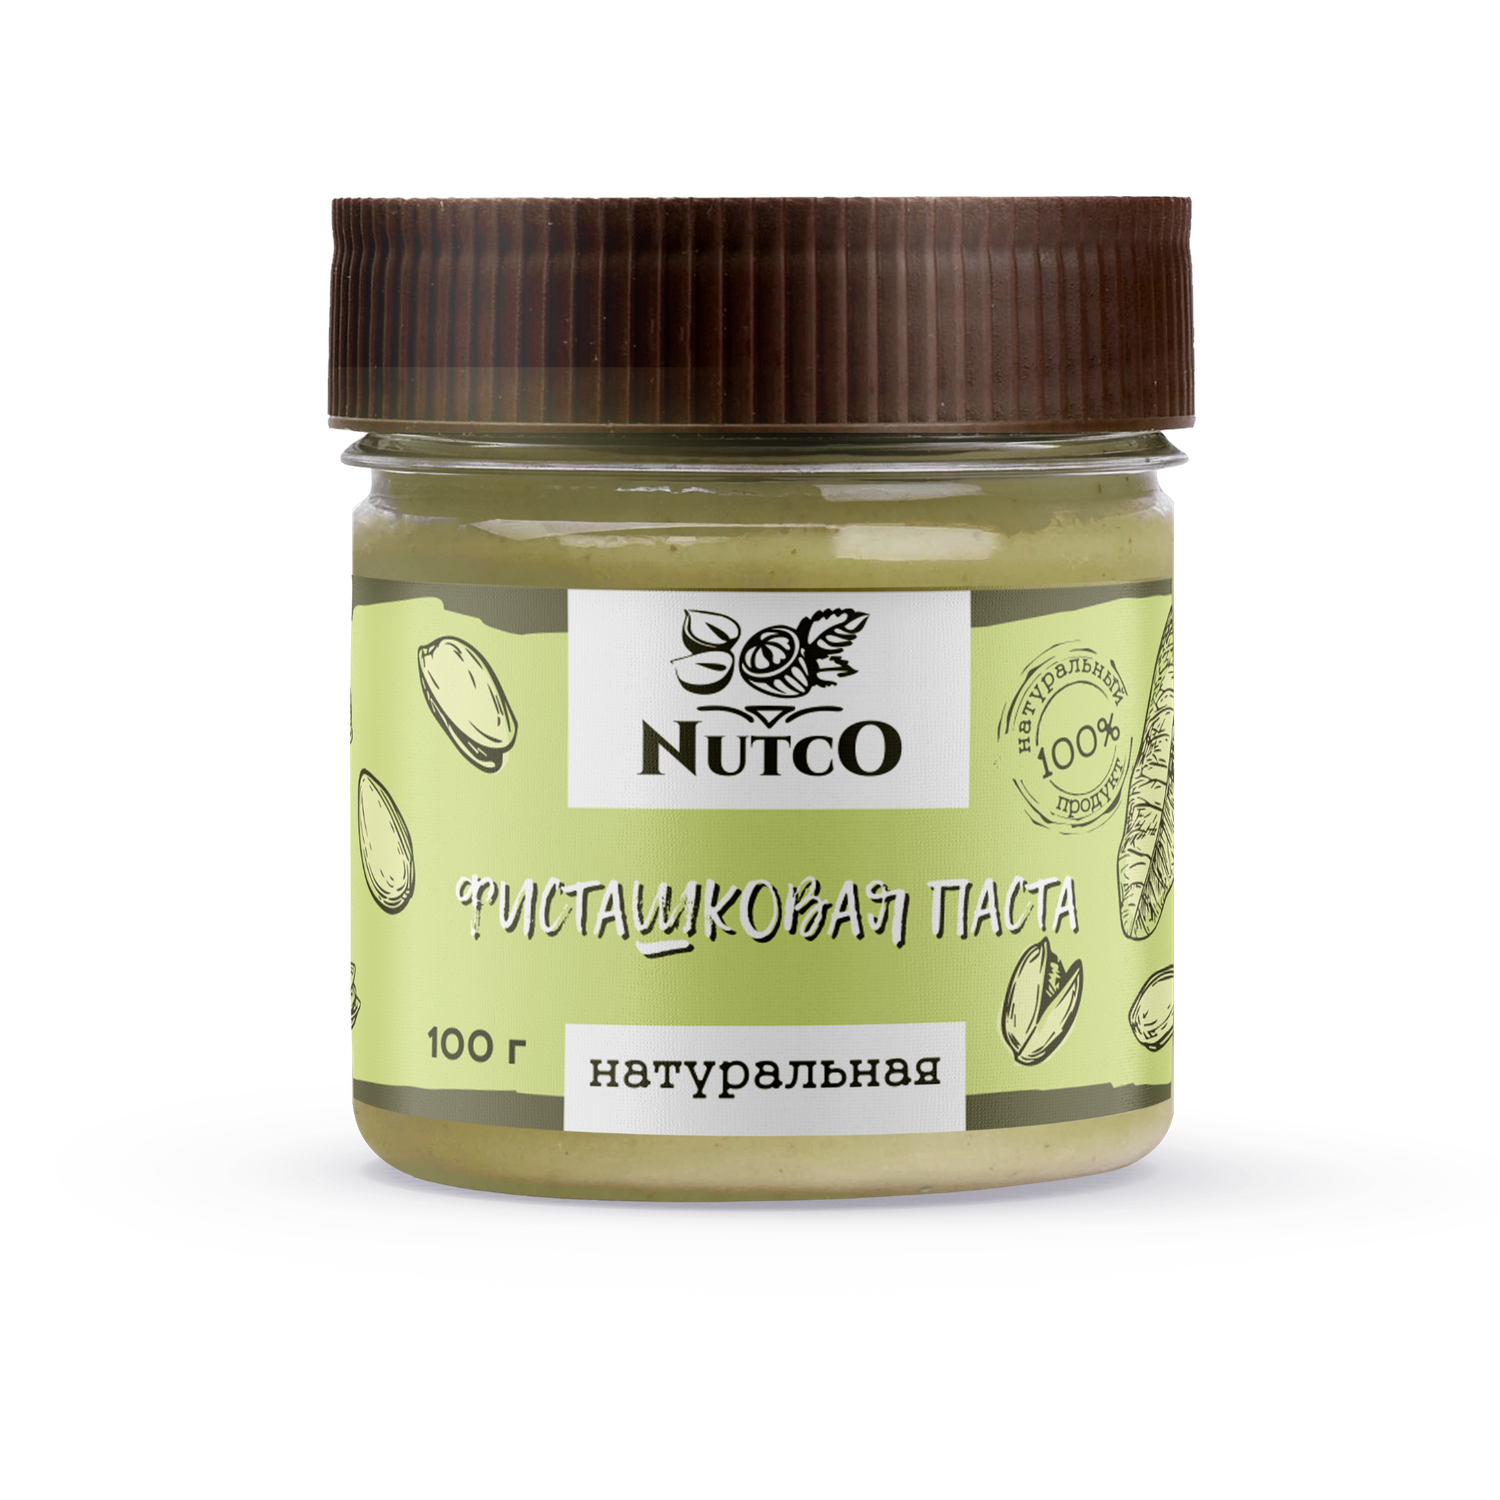 Фисташковая паста Nutco натуральная без сахара без добавок 100 г - фото 13